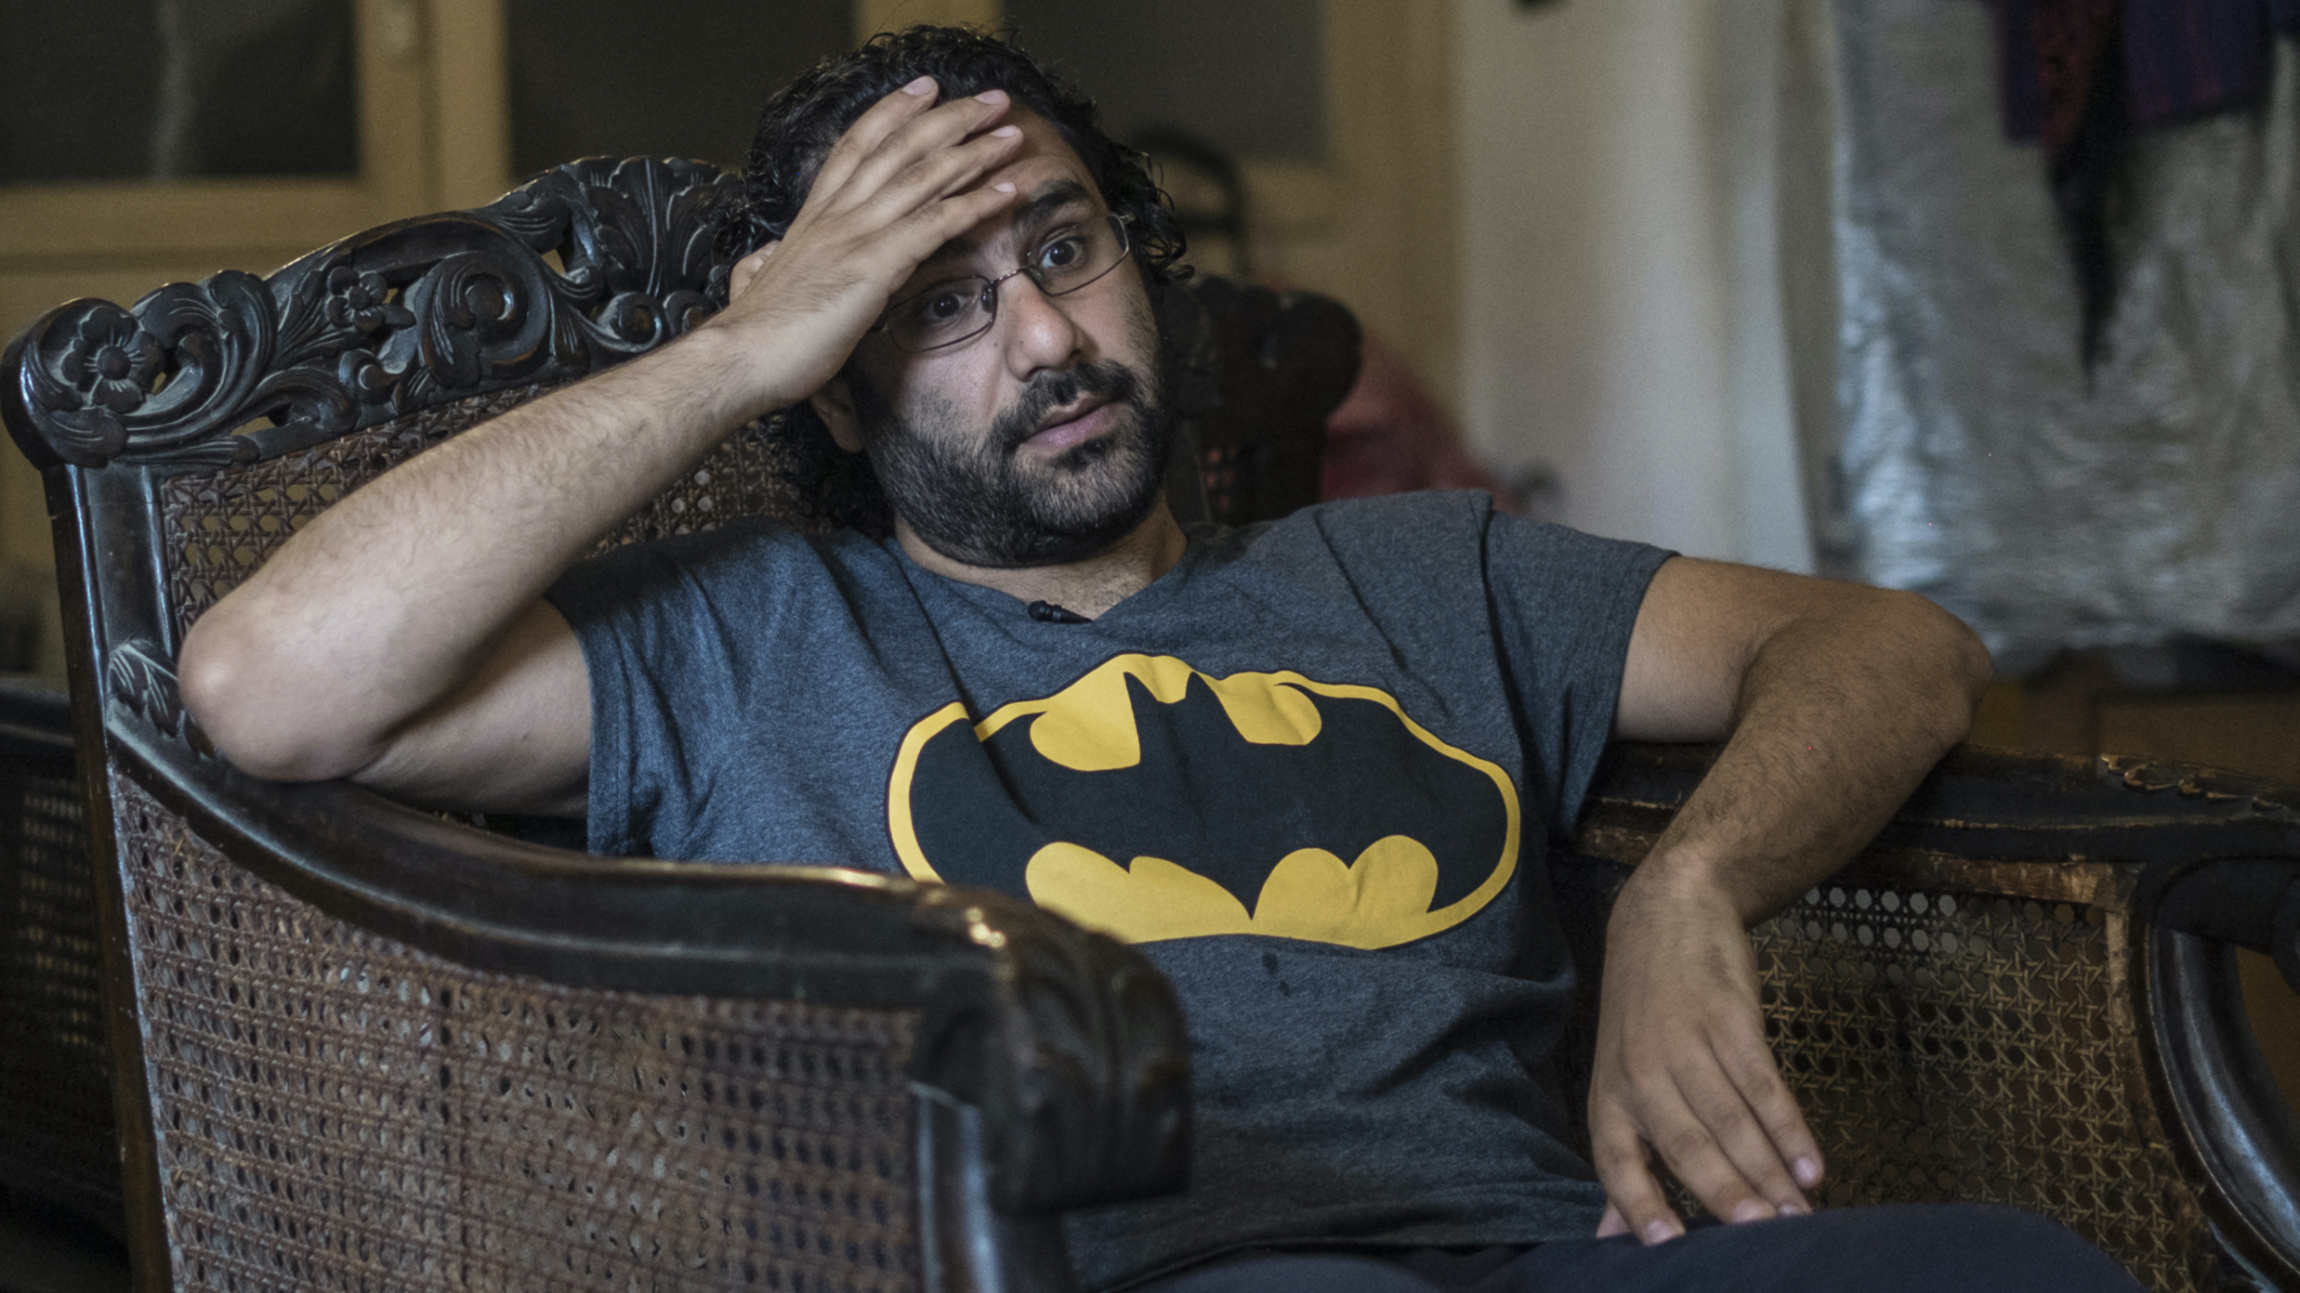 Egypt: Alaa Abd el-Fattah denied lawyer access despite first permit in